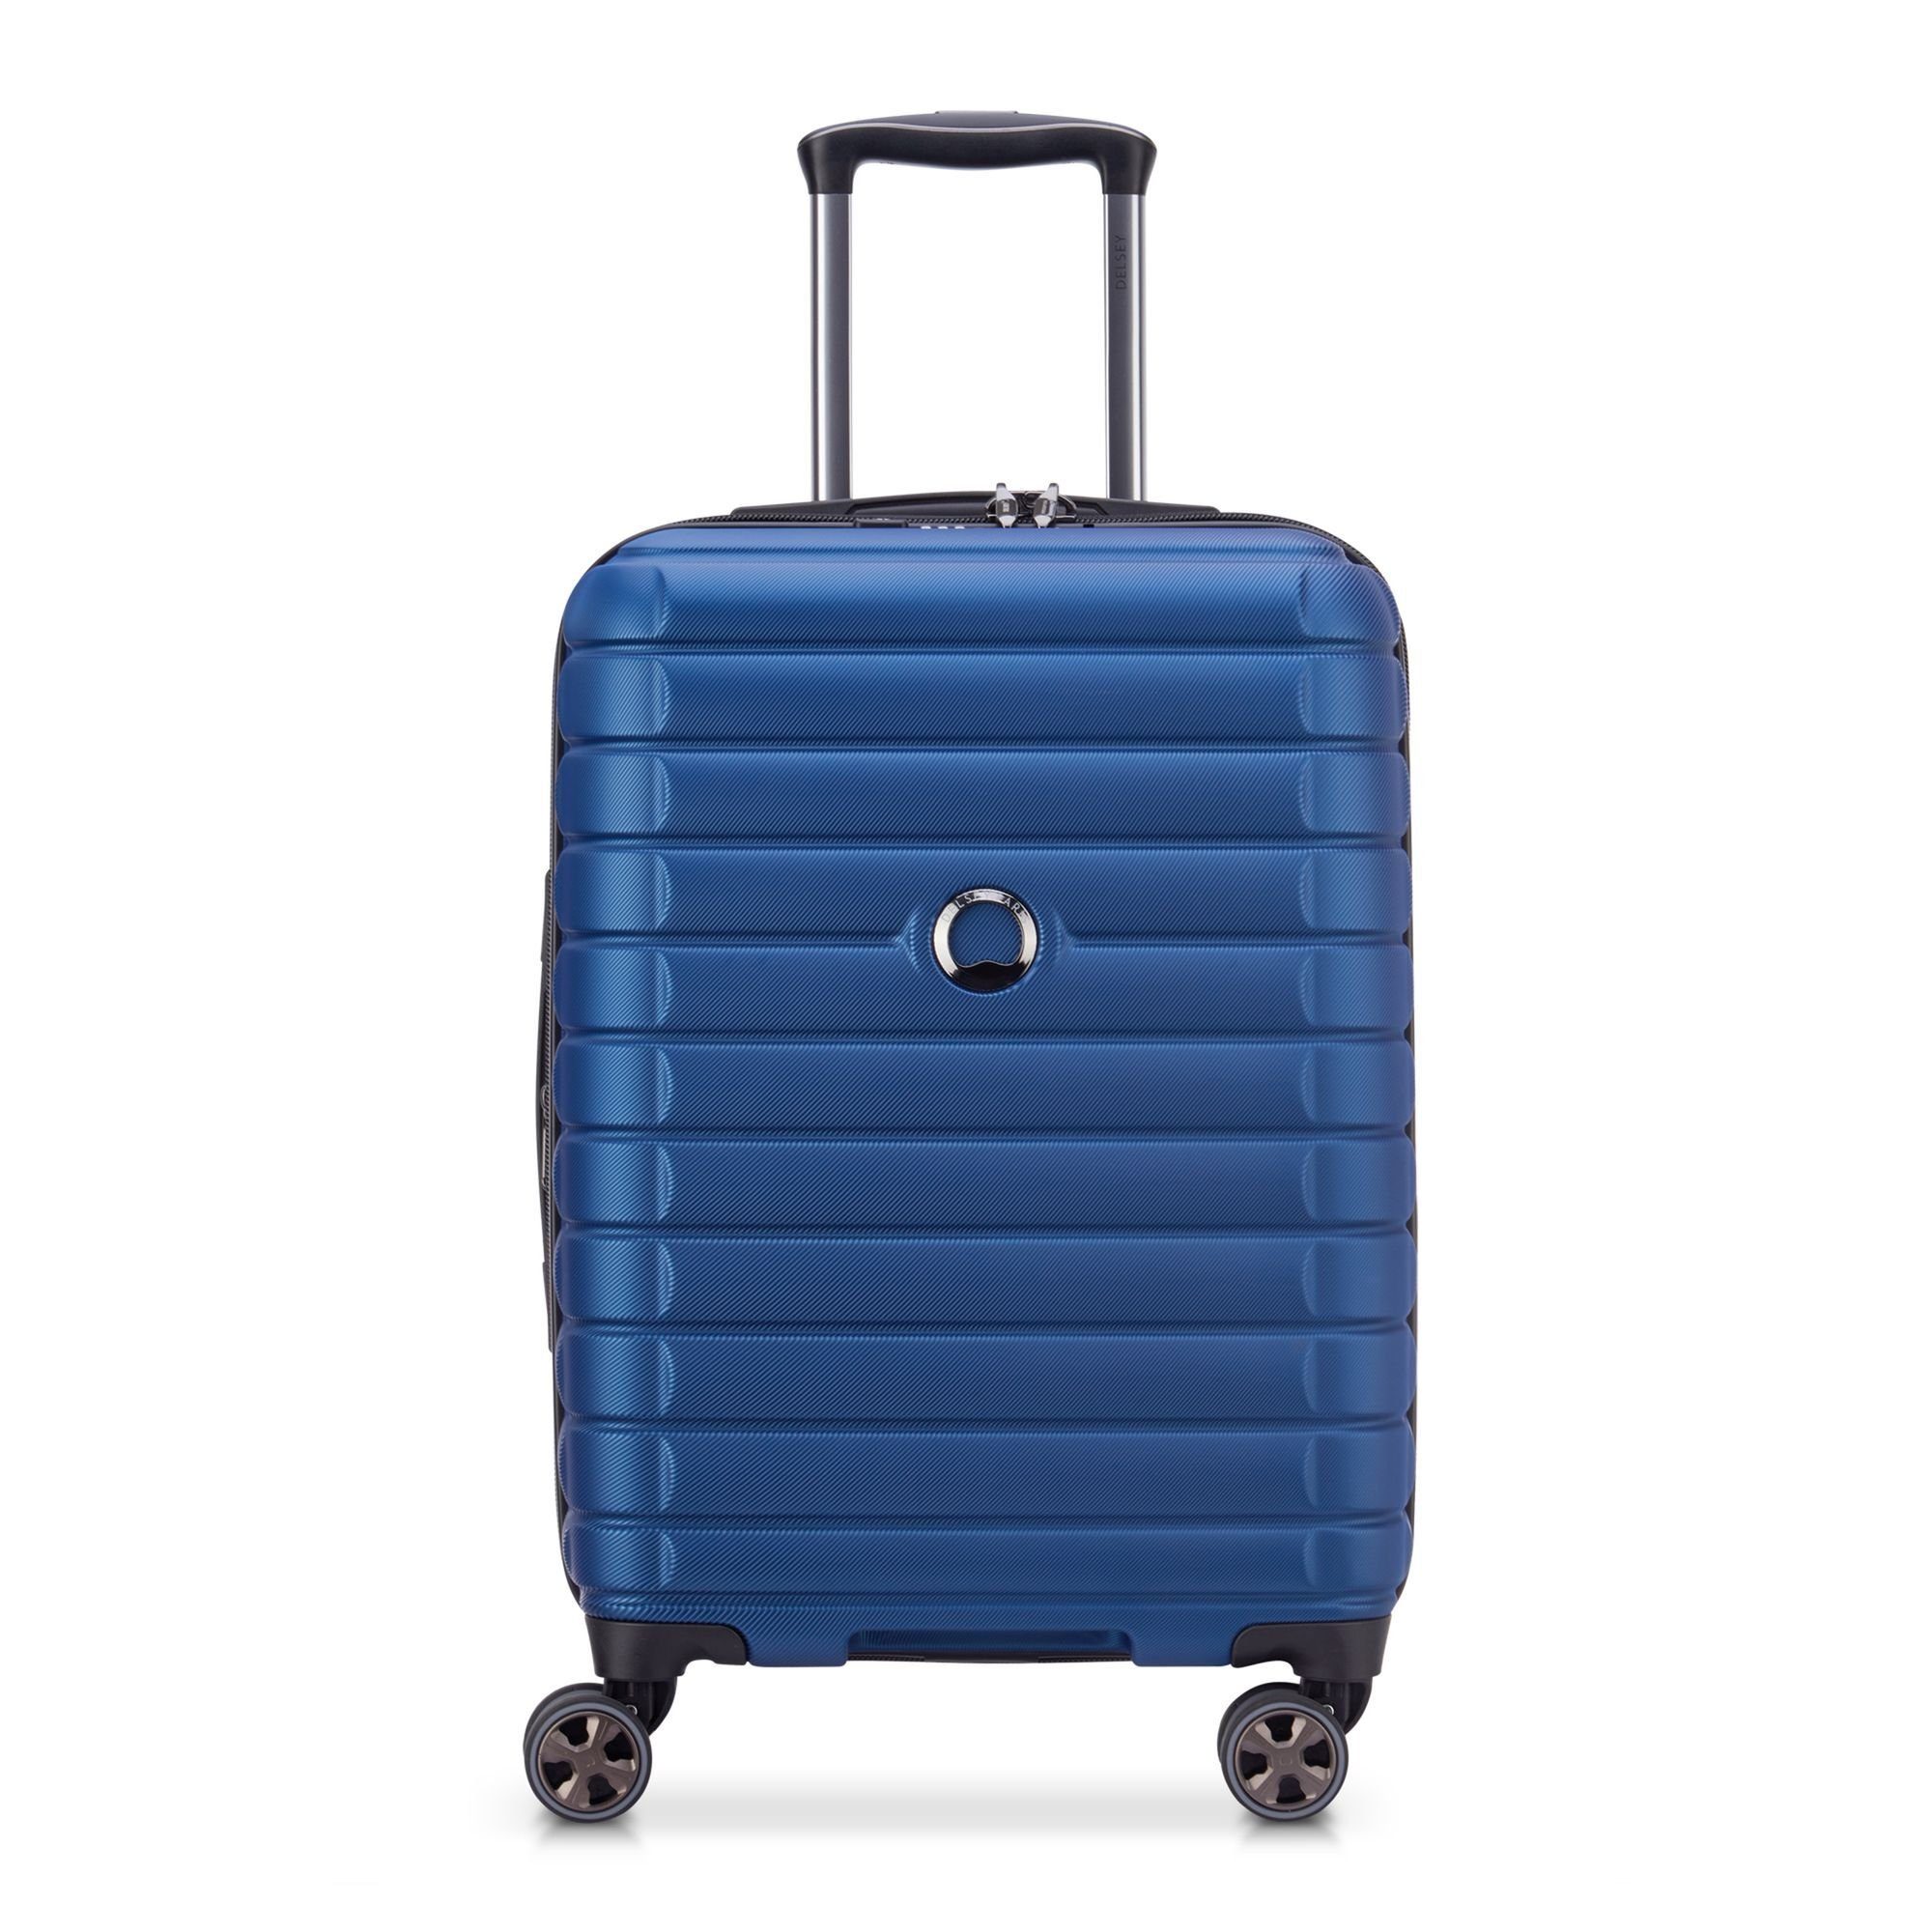 Delsey Handgepäck-Trolley Shadow 5.0, 4 Rollen, Polycarbonat blau | Handgepäck-Koffer